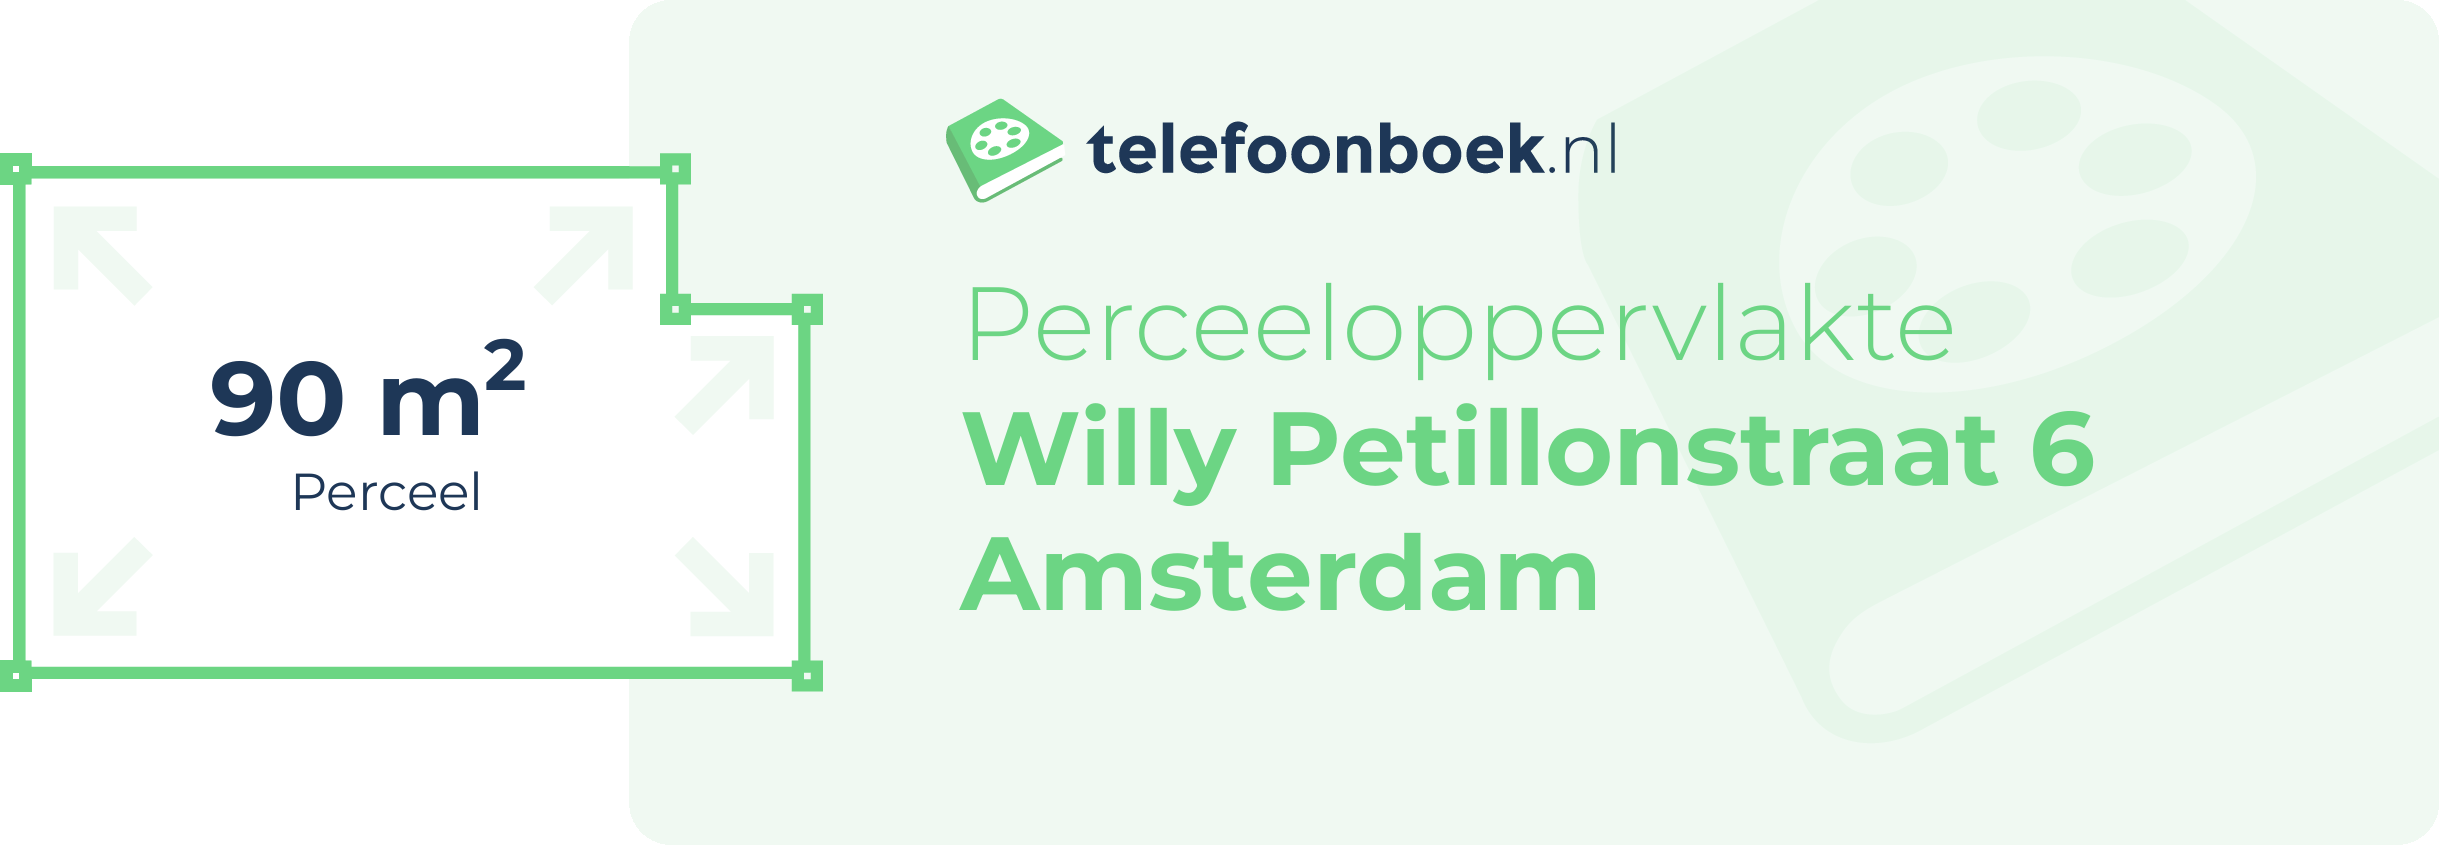 Perceeloppervlakte Willy Petillonstraat 6 Amsterdam